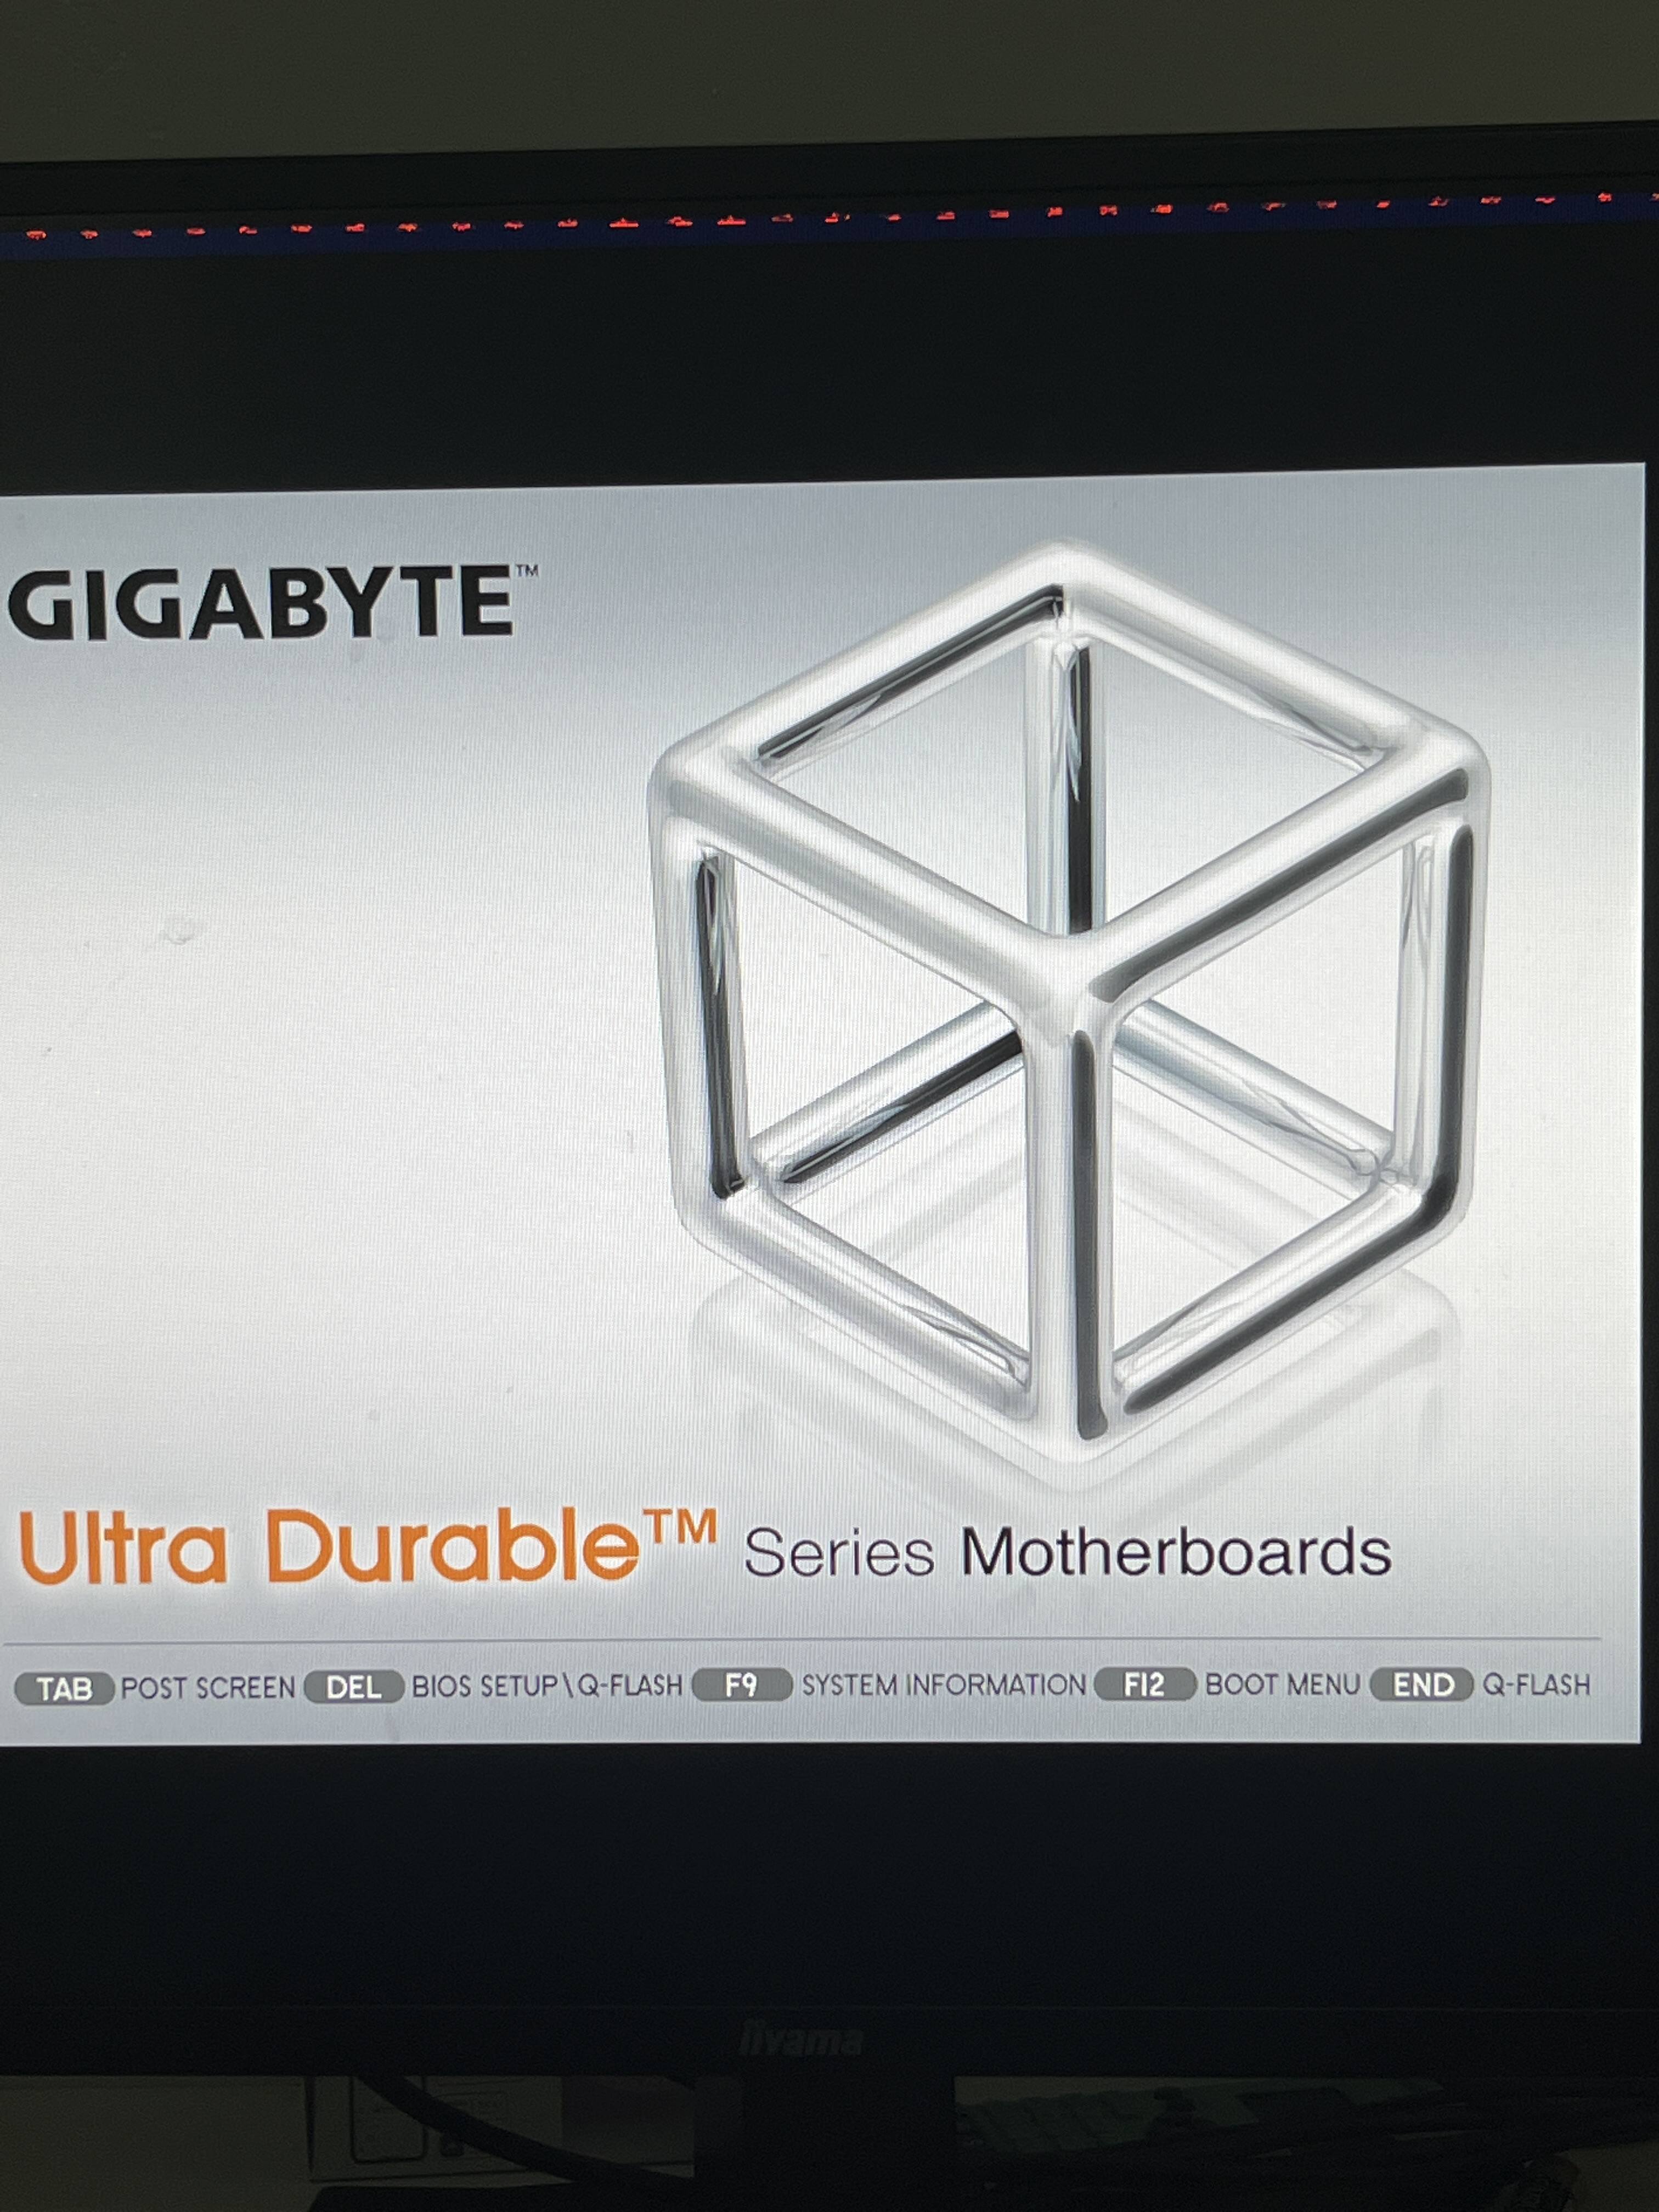 Gigabyte freeze screen - Troubleshooting - Linus Tech Tips